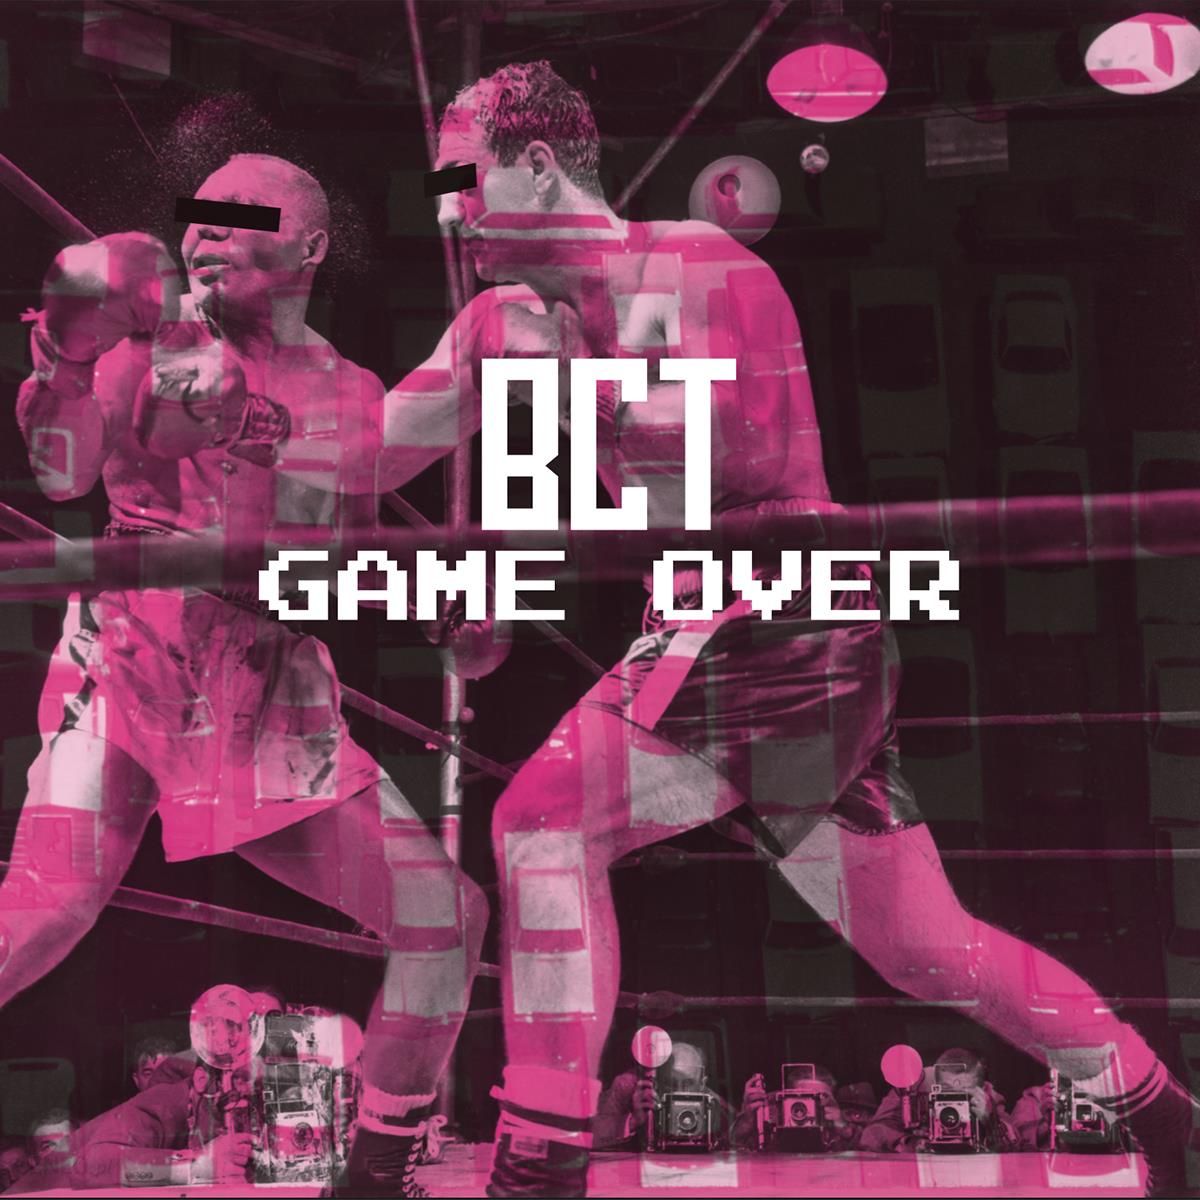 btc game over